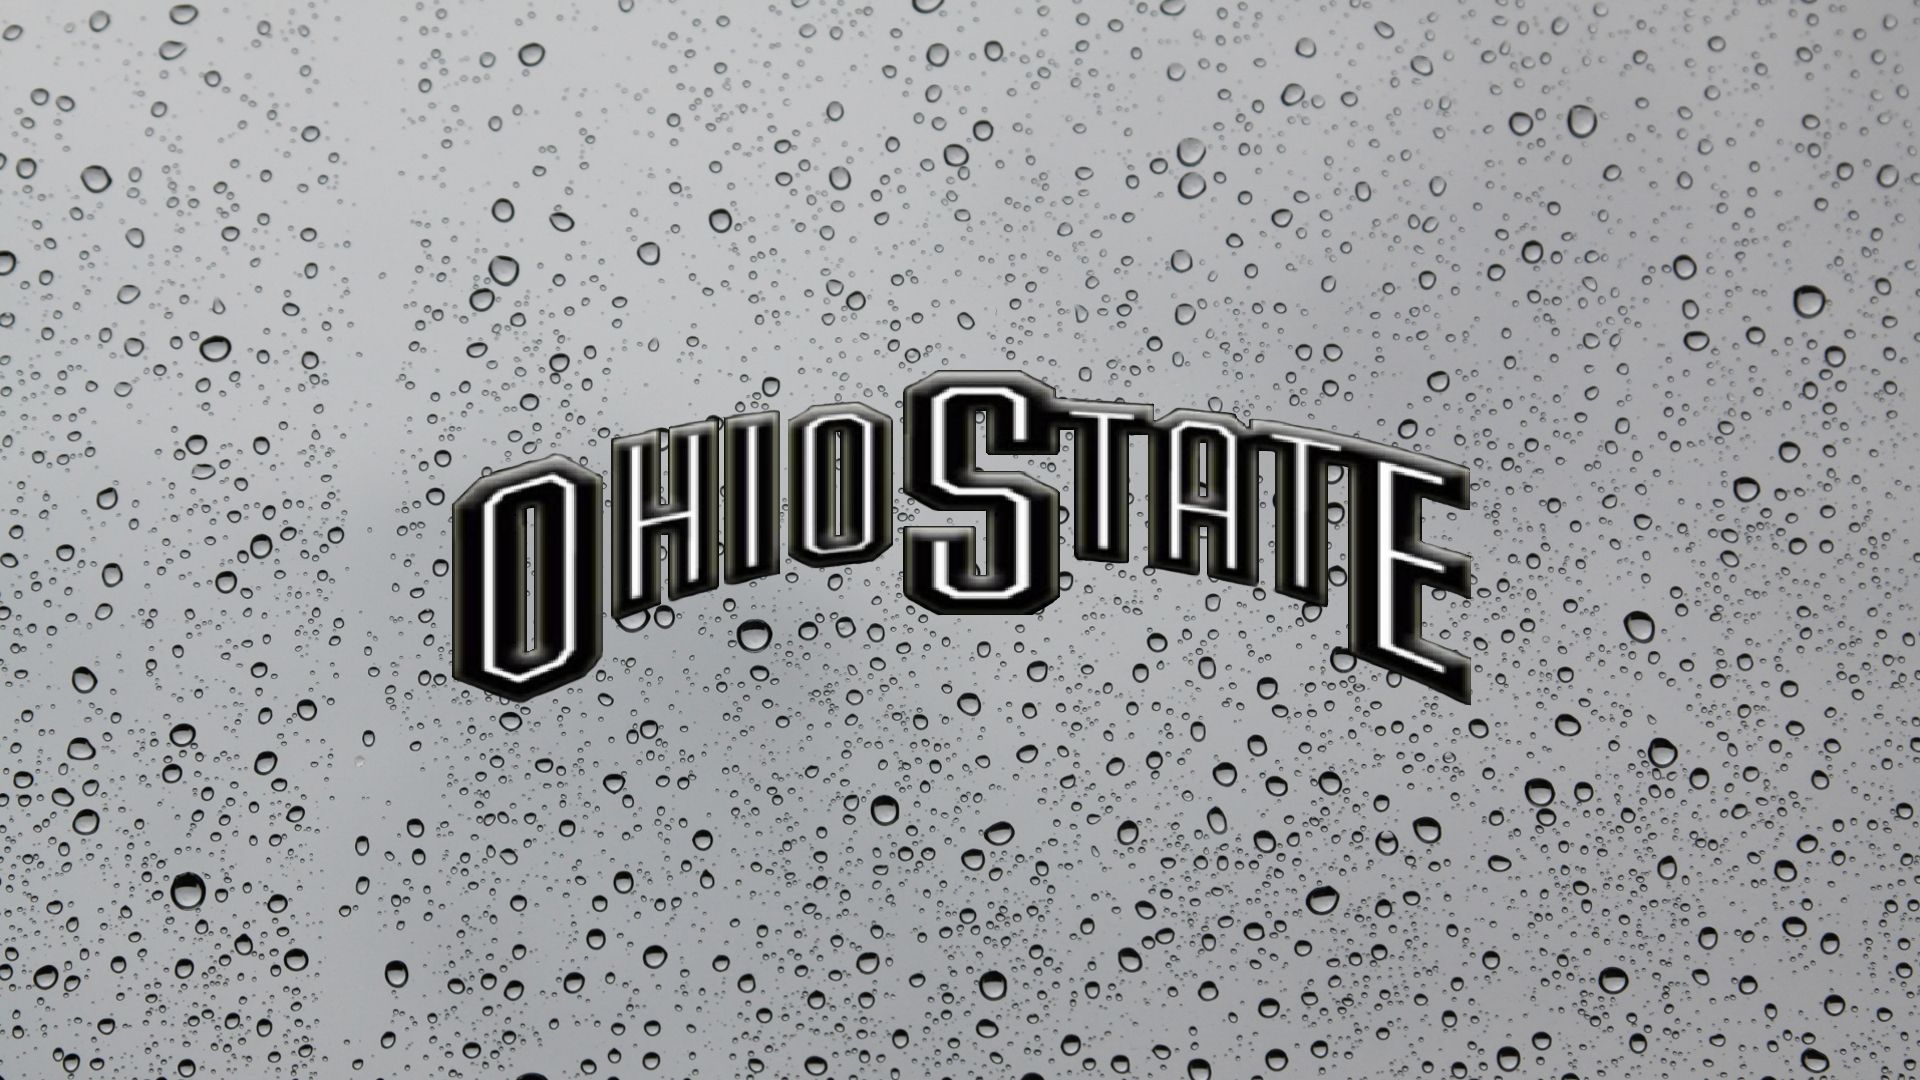 OSU Wallpaper 117 - Ohio State Football Wallpaper (28702265) - Fanpop